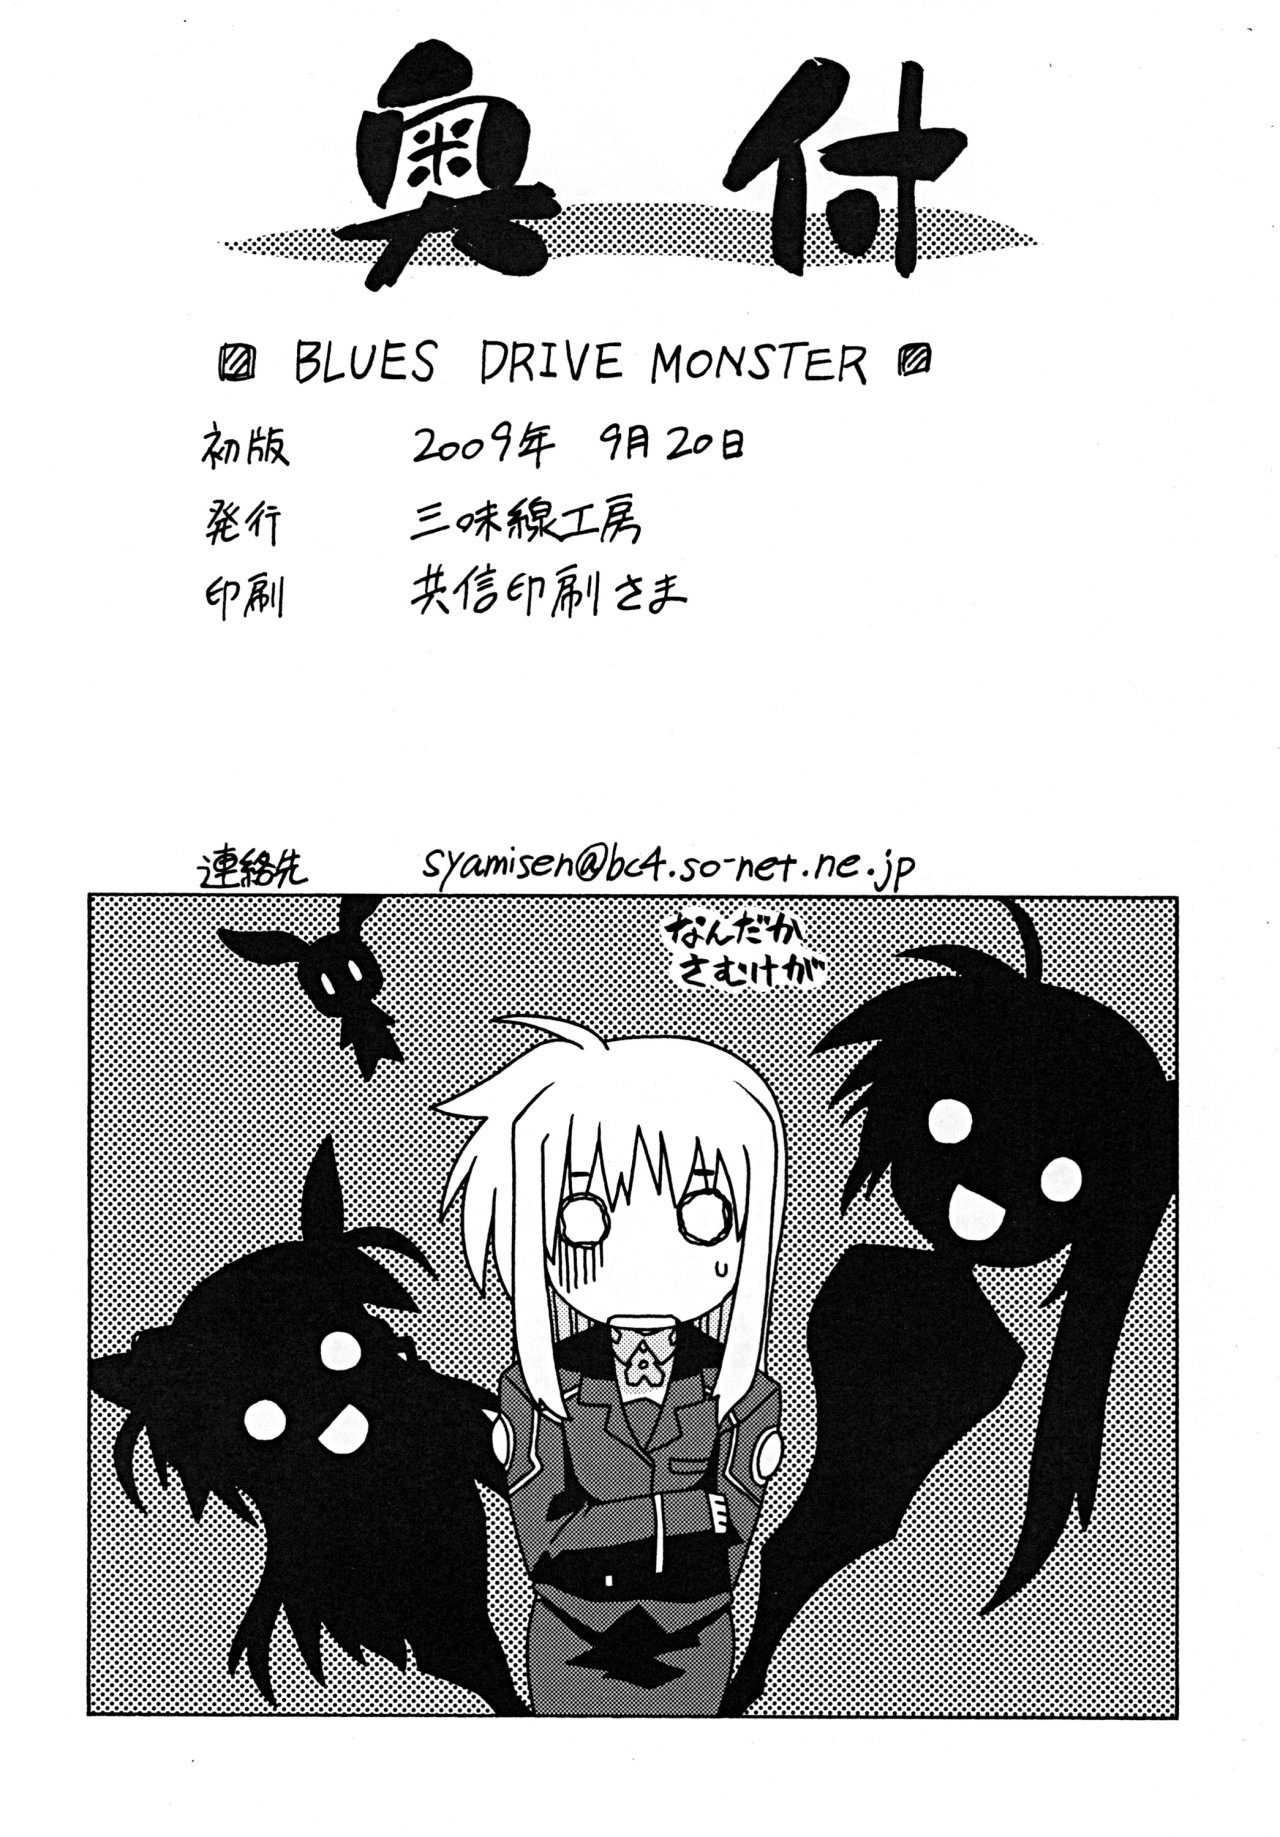 BLUES DRIVE MONSTER - 20